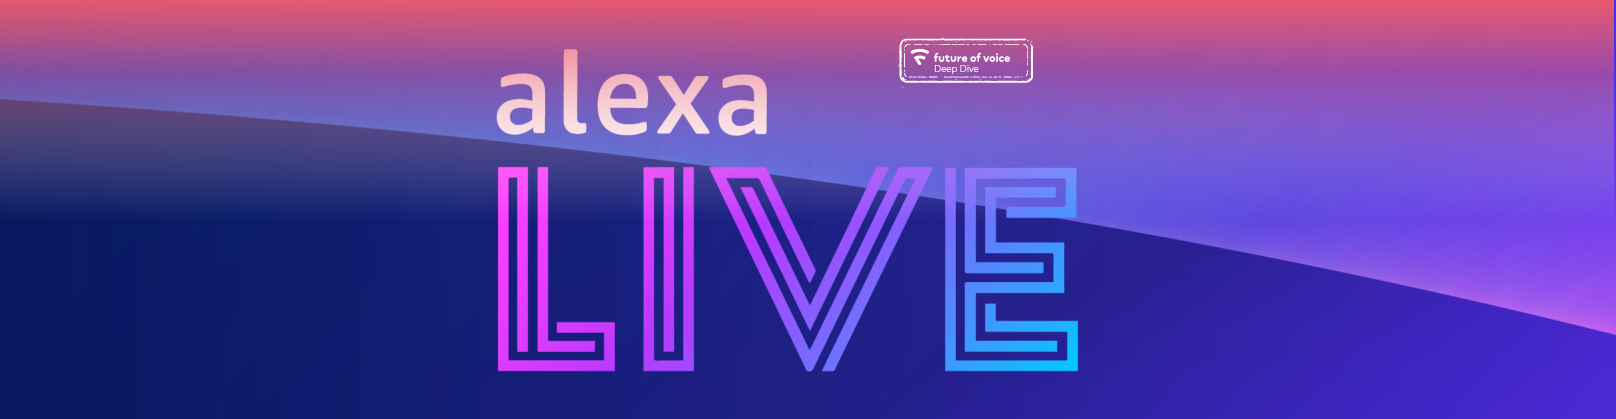 Was ist neu? Alexa Live Event 2021